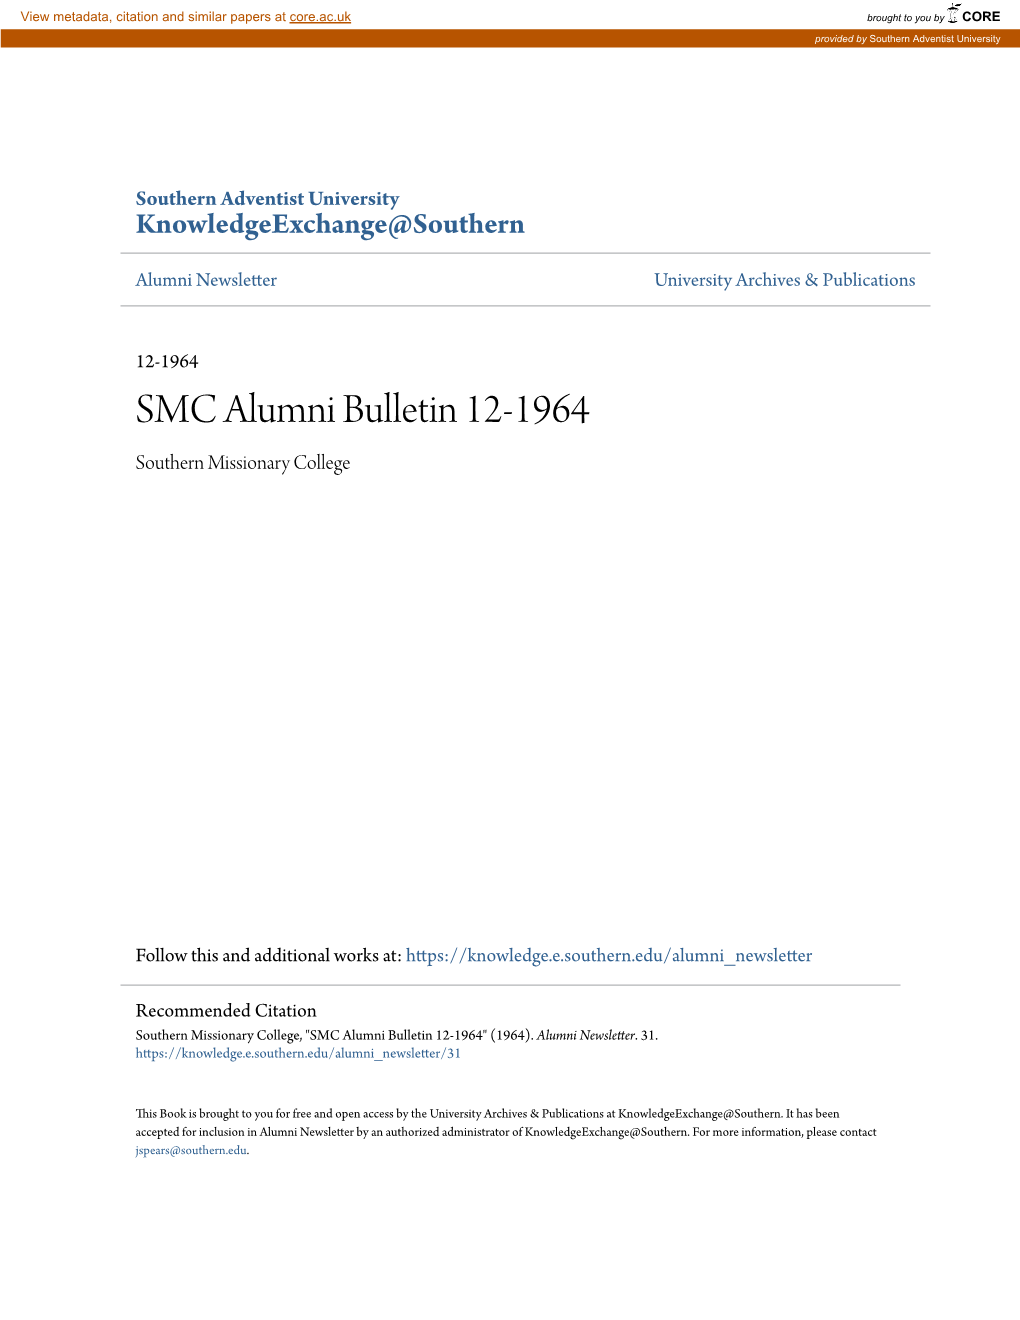 SMC Alumni Bulletin 12-1964 Southern Missionary College